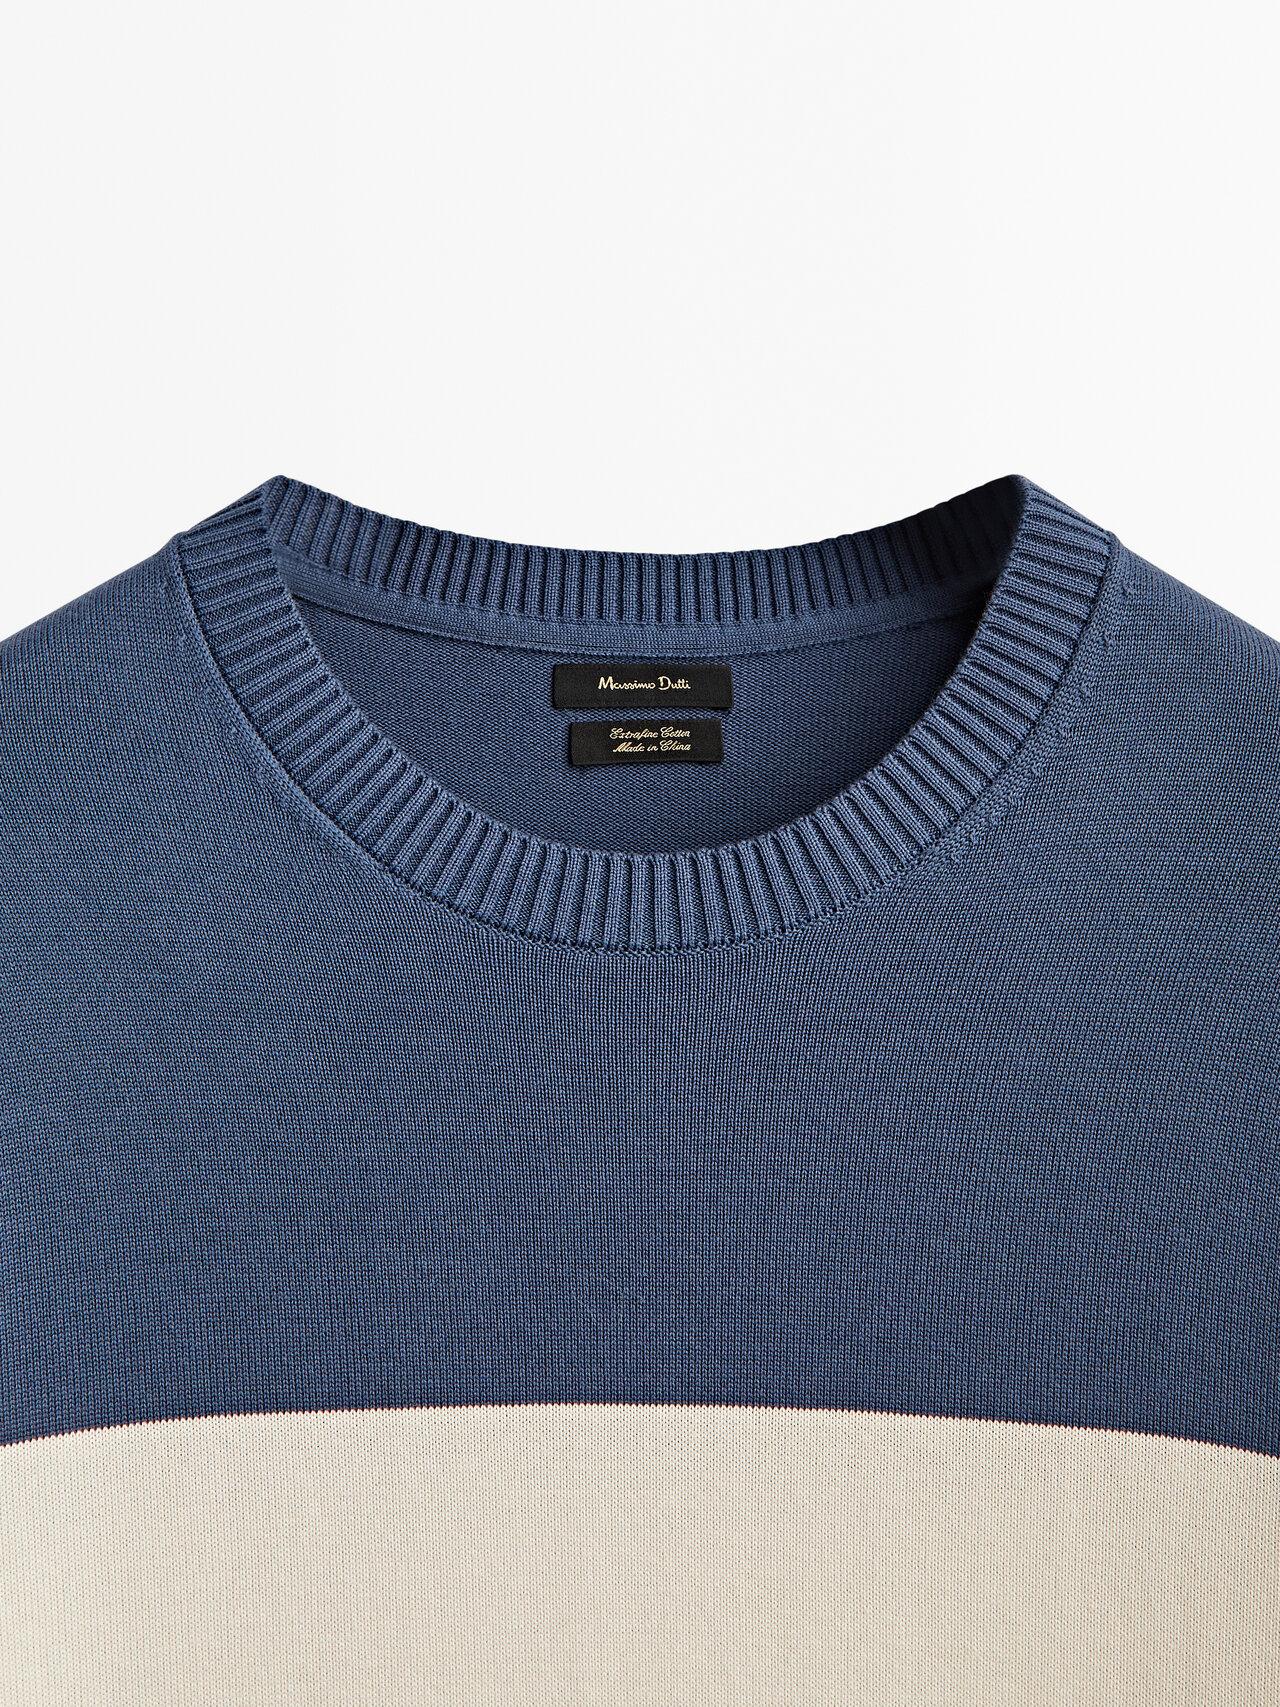 MASSIMO DUTTI Colour Block Crew Neck Sweater in Blue for Men | Lyst